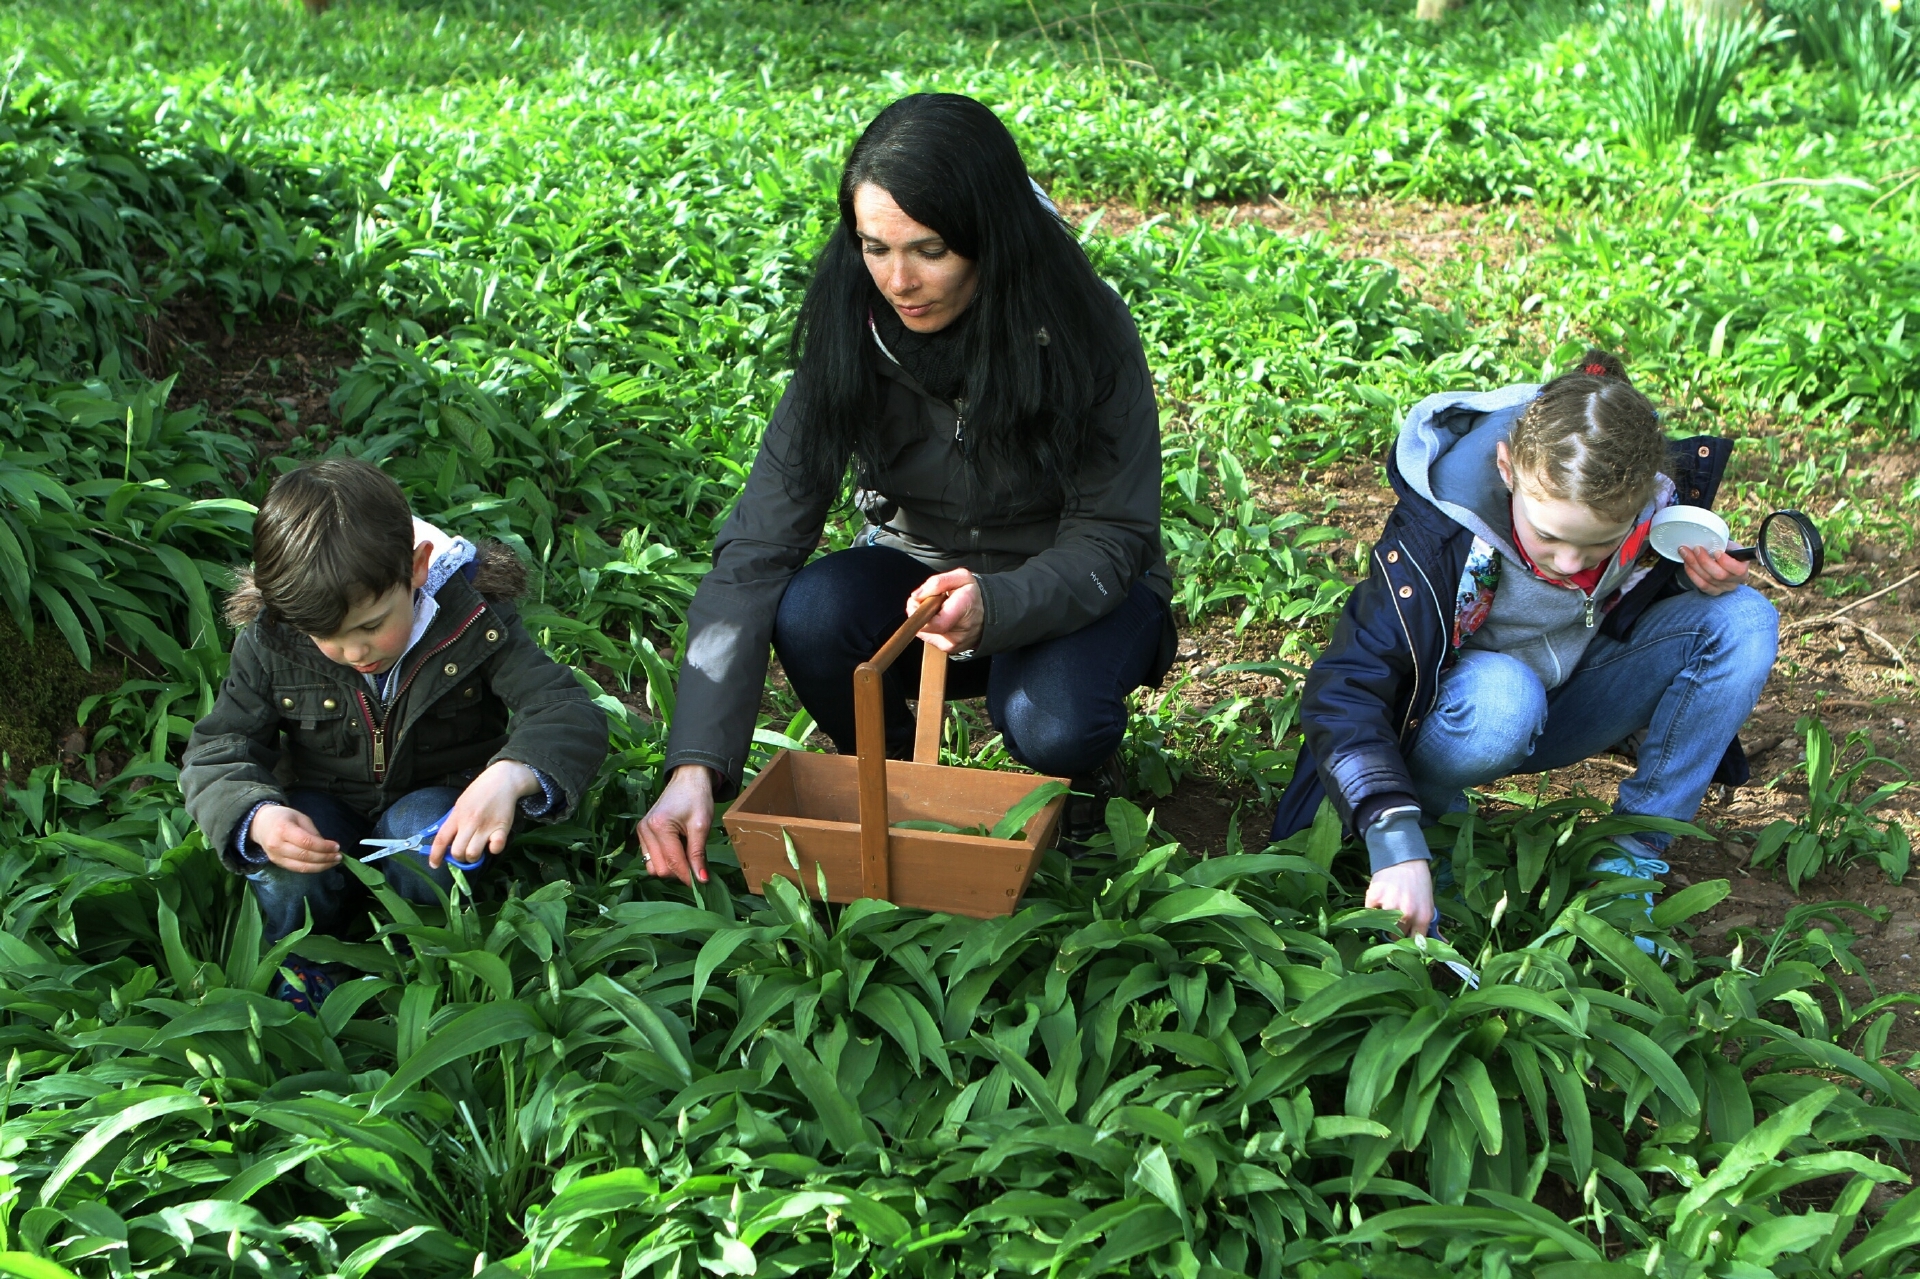 Gayle picking wild garlic with Robbie and Ellie Towns.